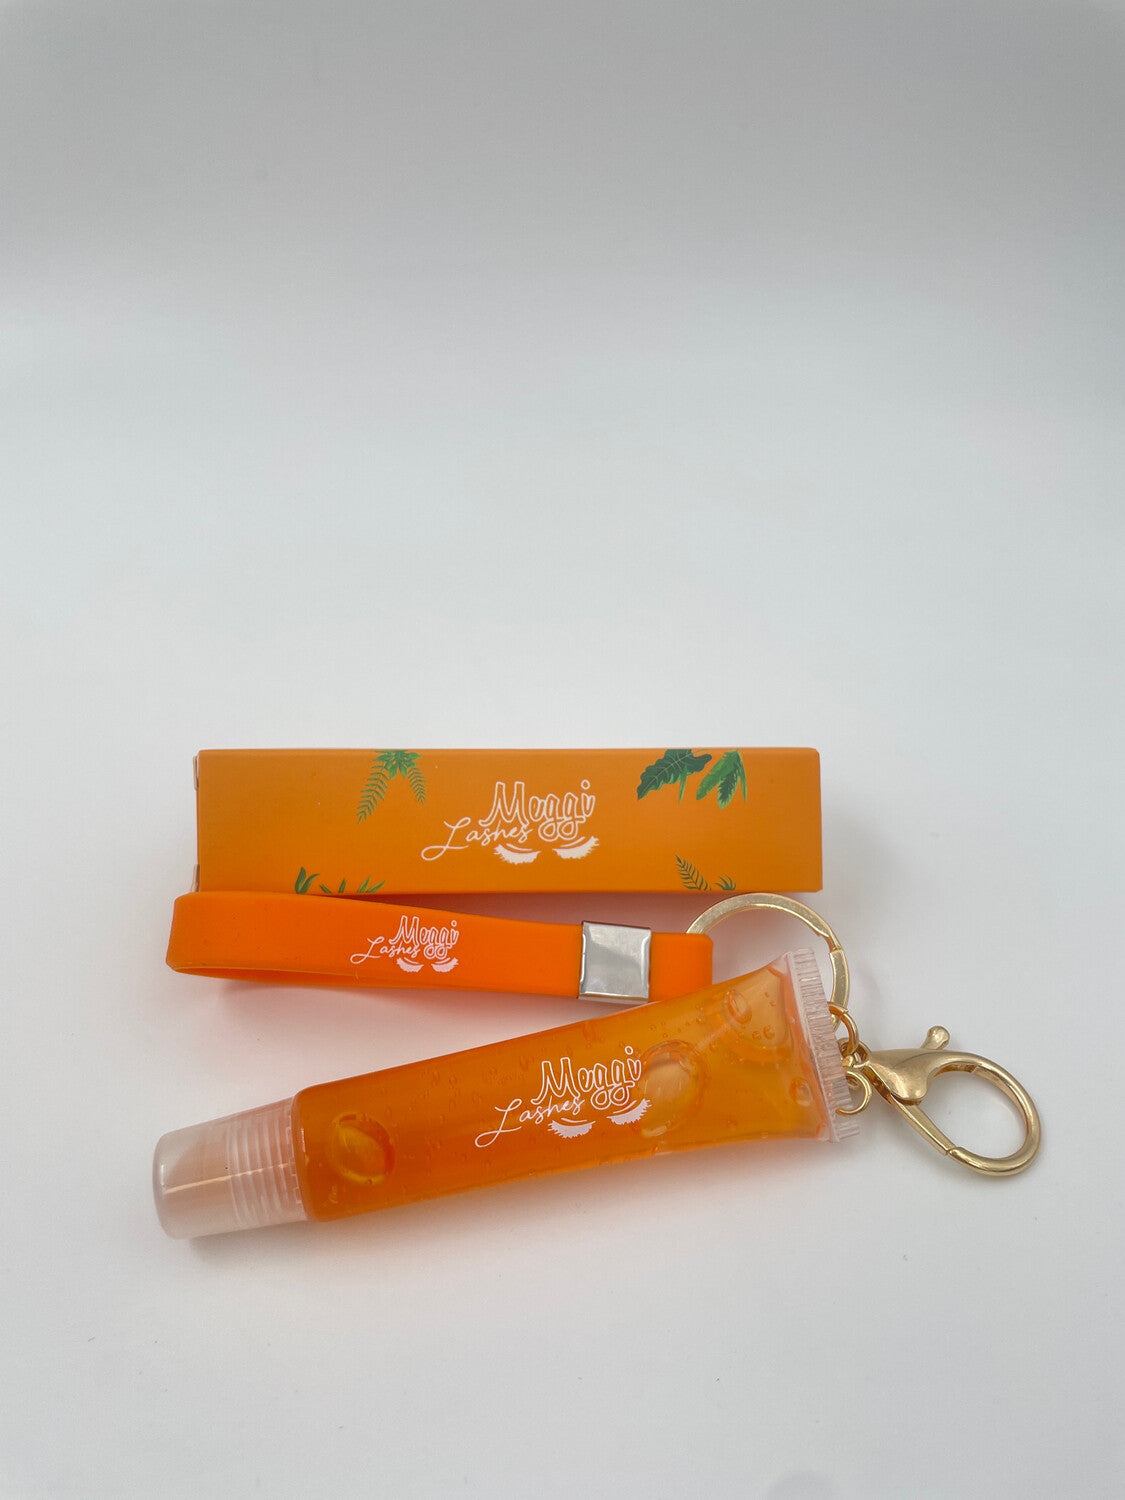 Mini Lipgloss Key Chain – Meggi Lashes